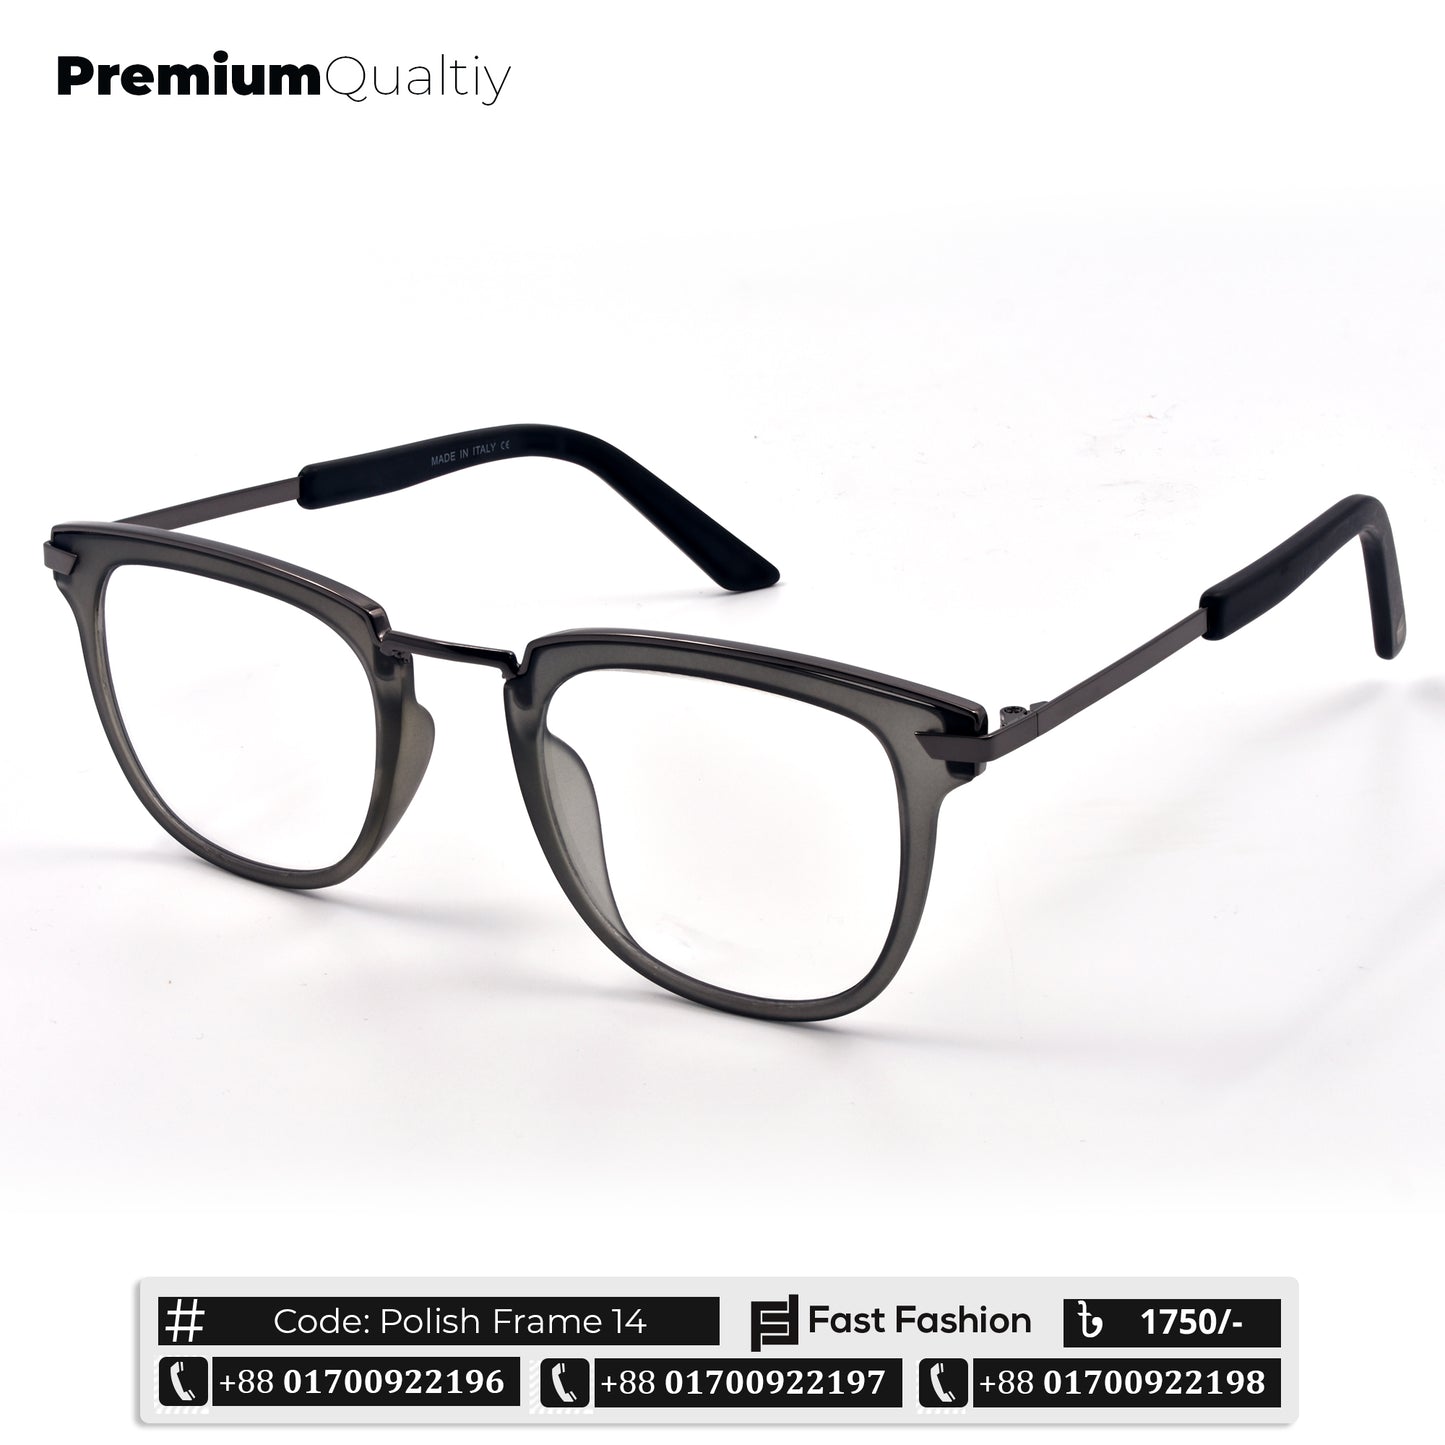 Trendy Stylish Optic Frame | Polish Frame 14 | Premium Quality